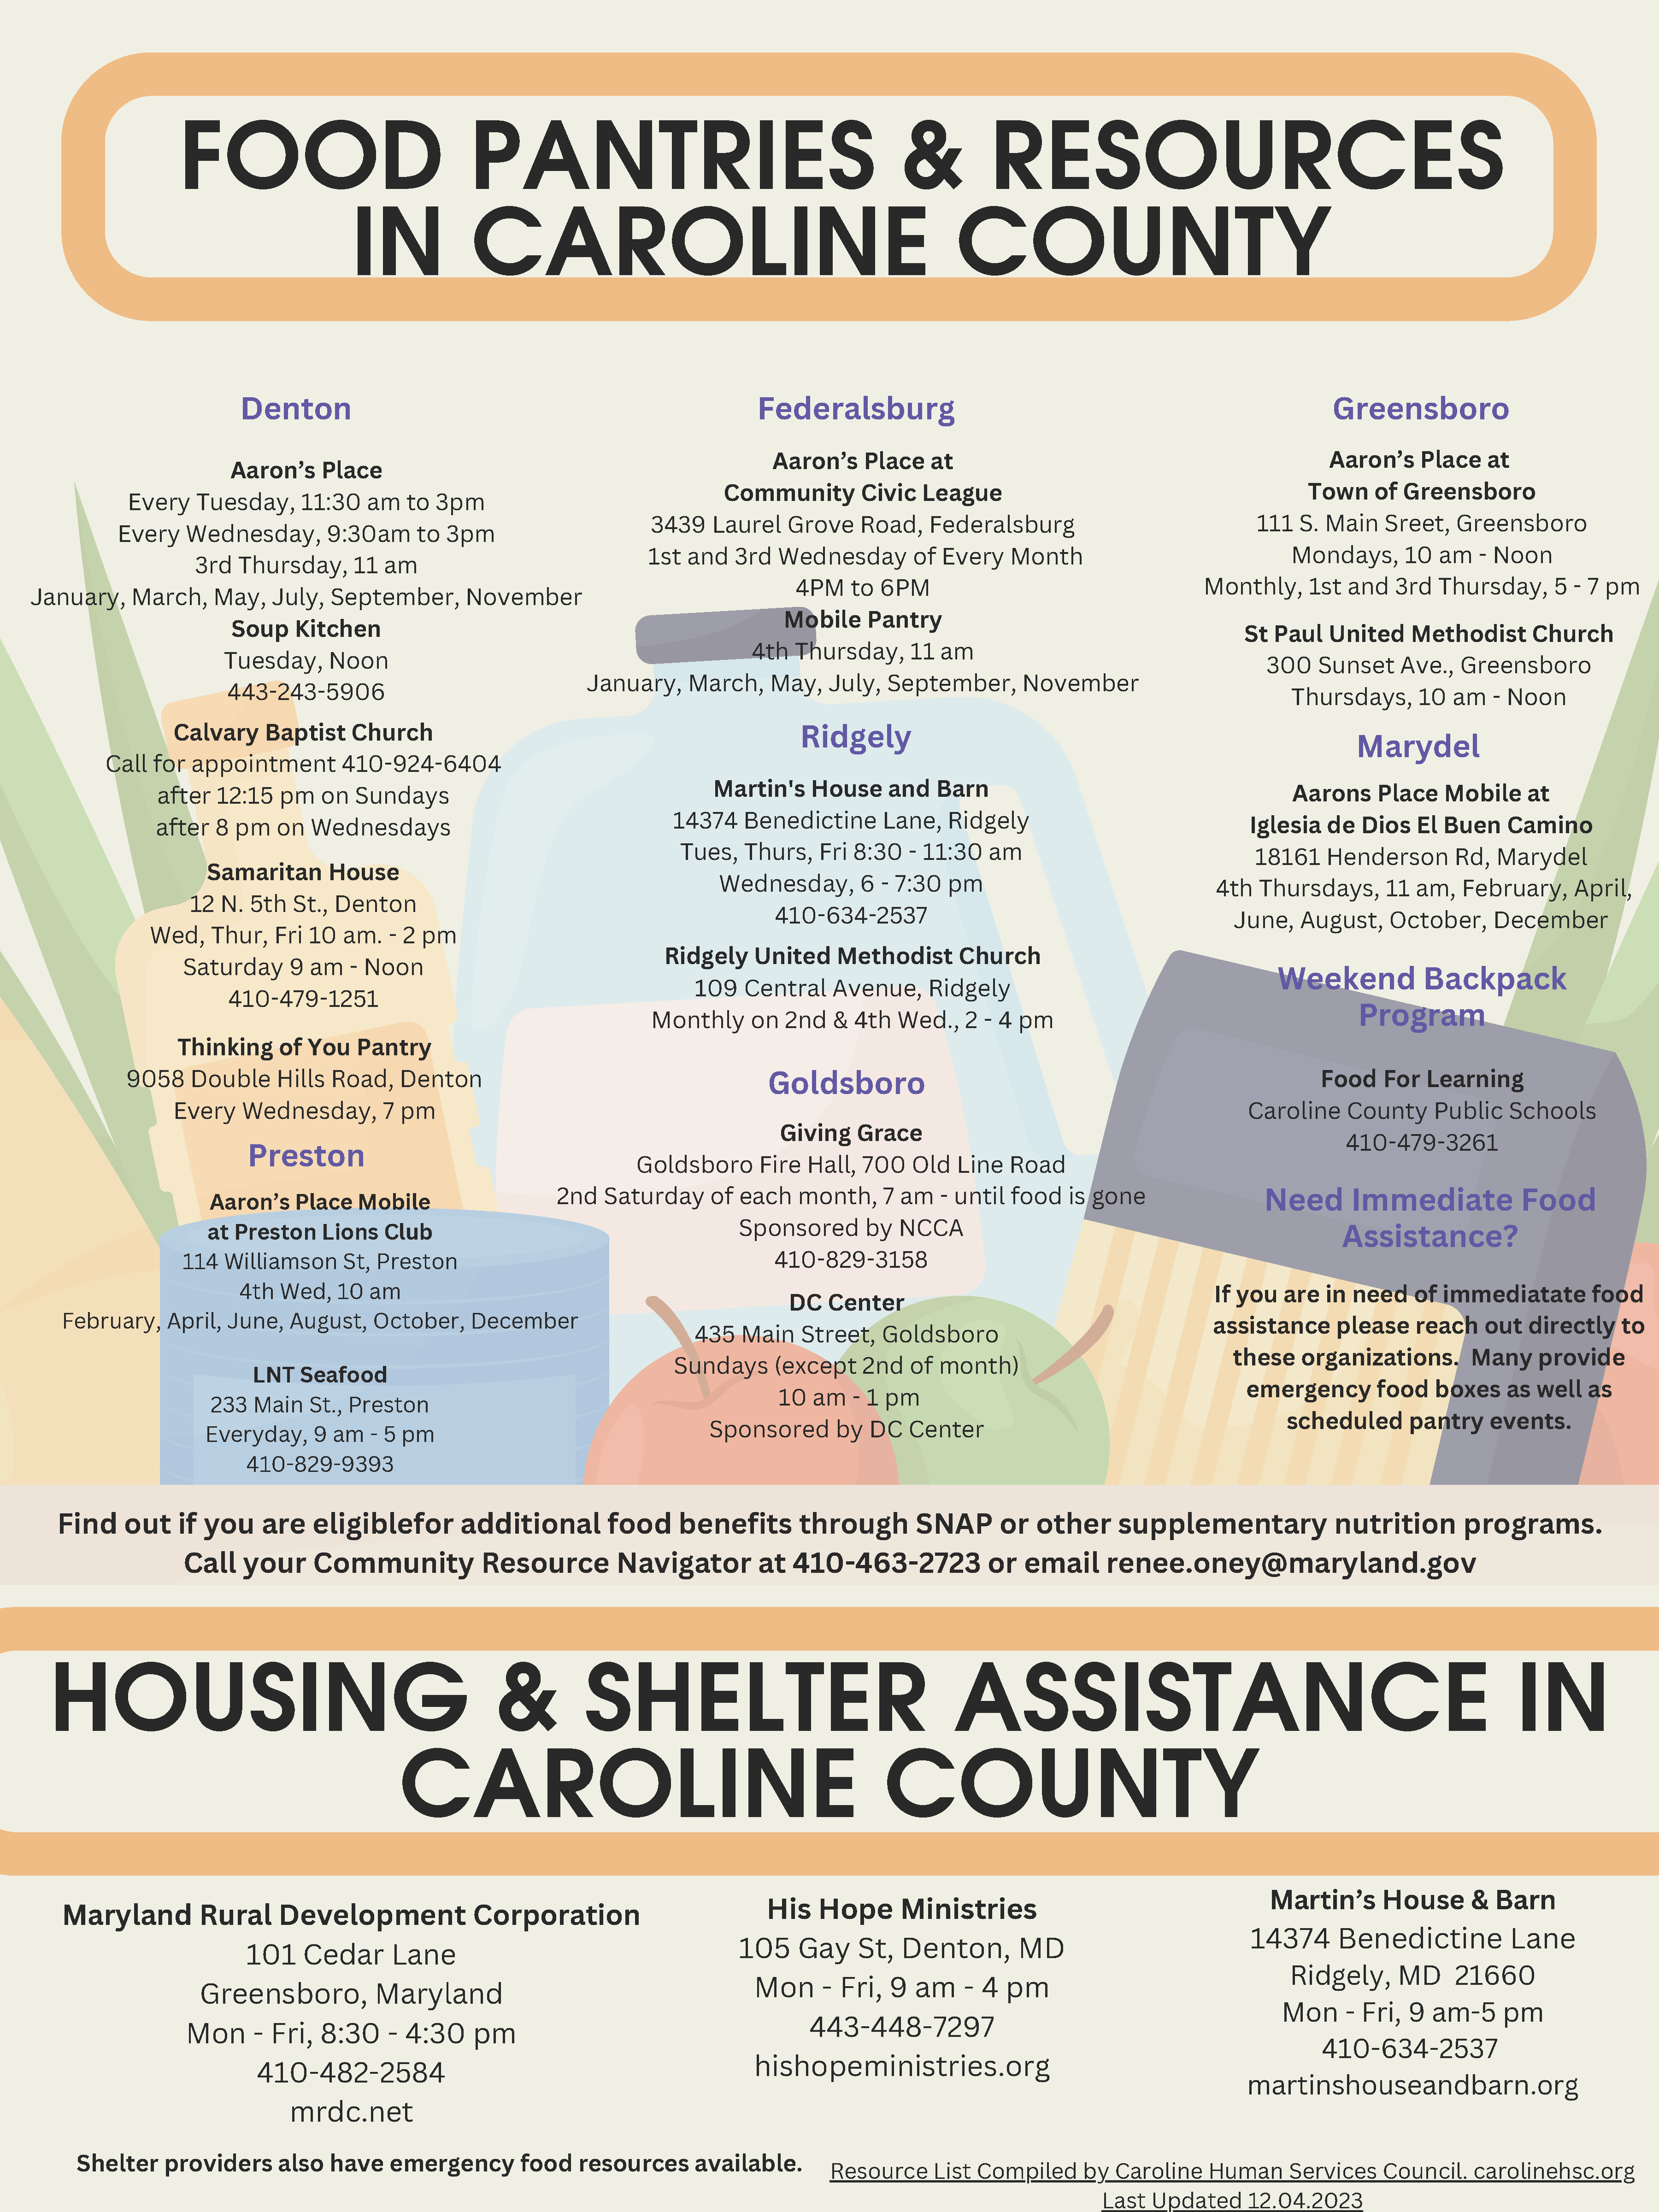 Caroline Food & Housing Resources 12042023